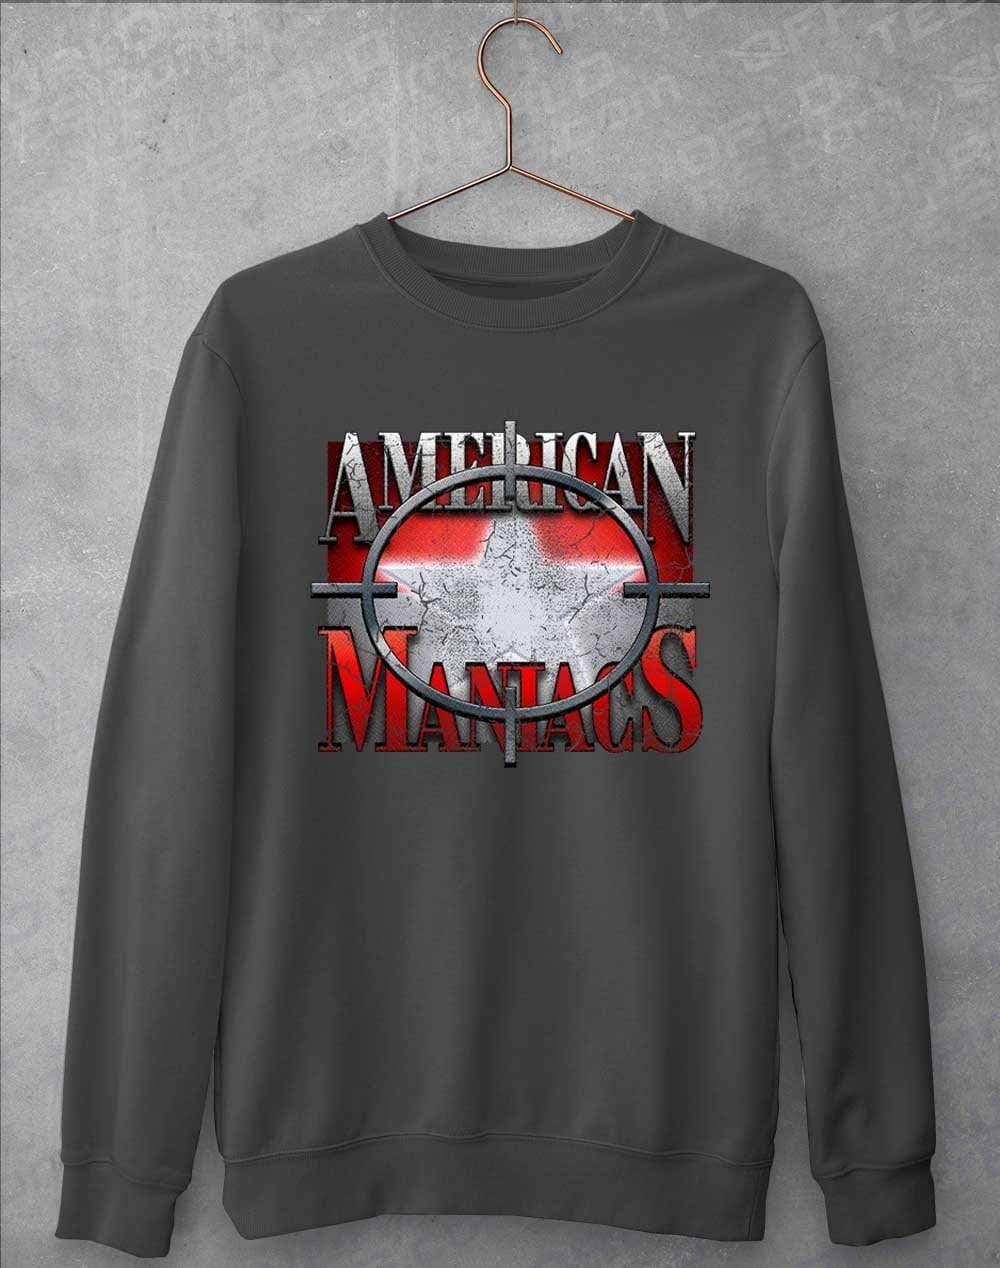 American Maniacs - Sweatshirt S / Charcoal  - Off World Tees